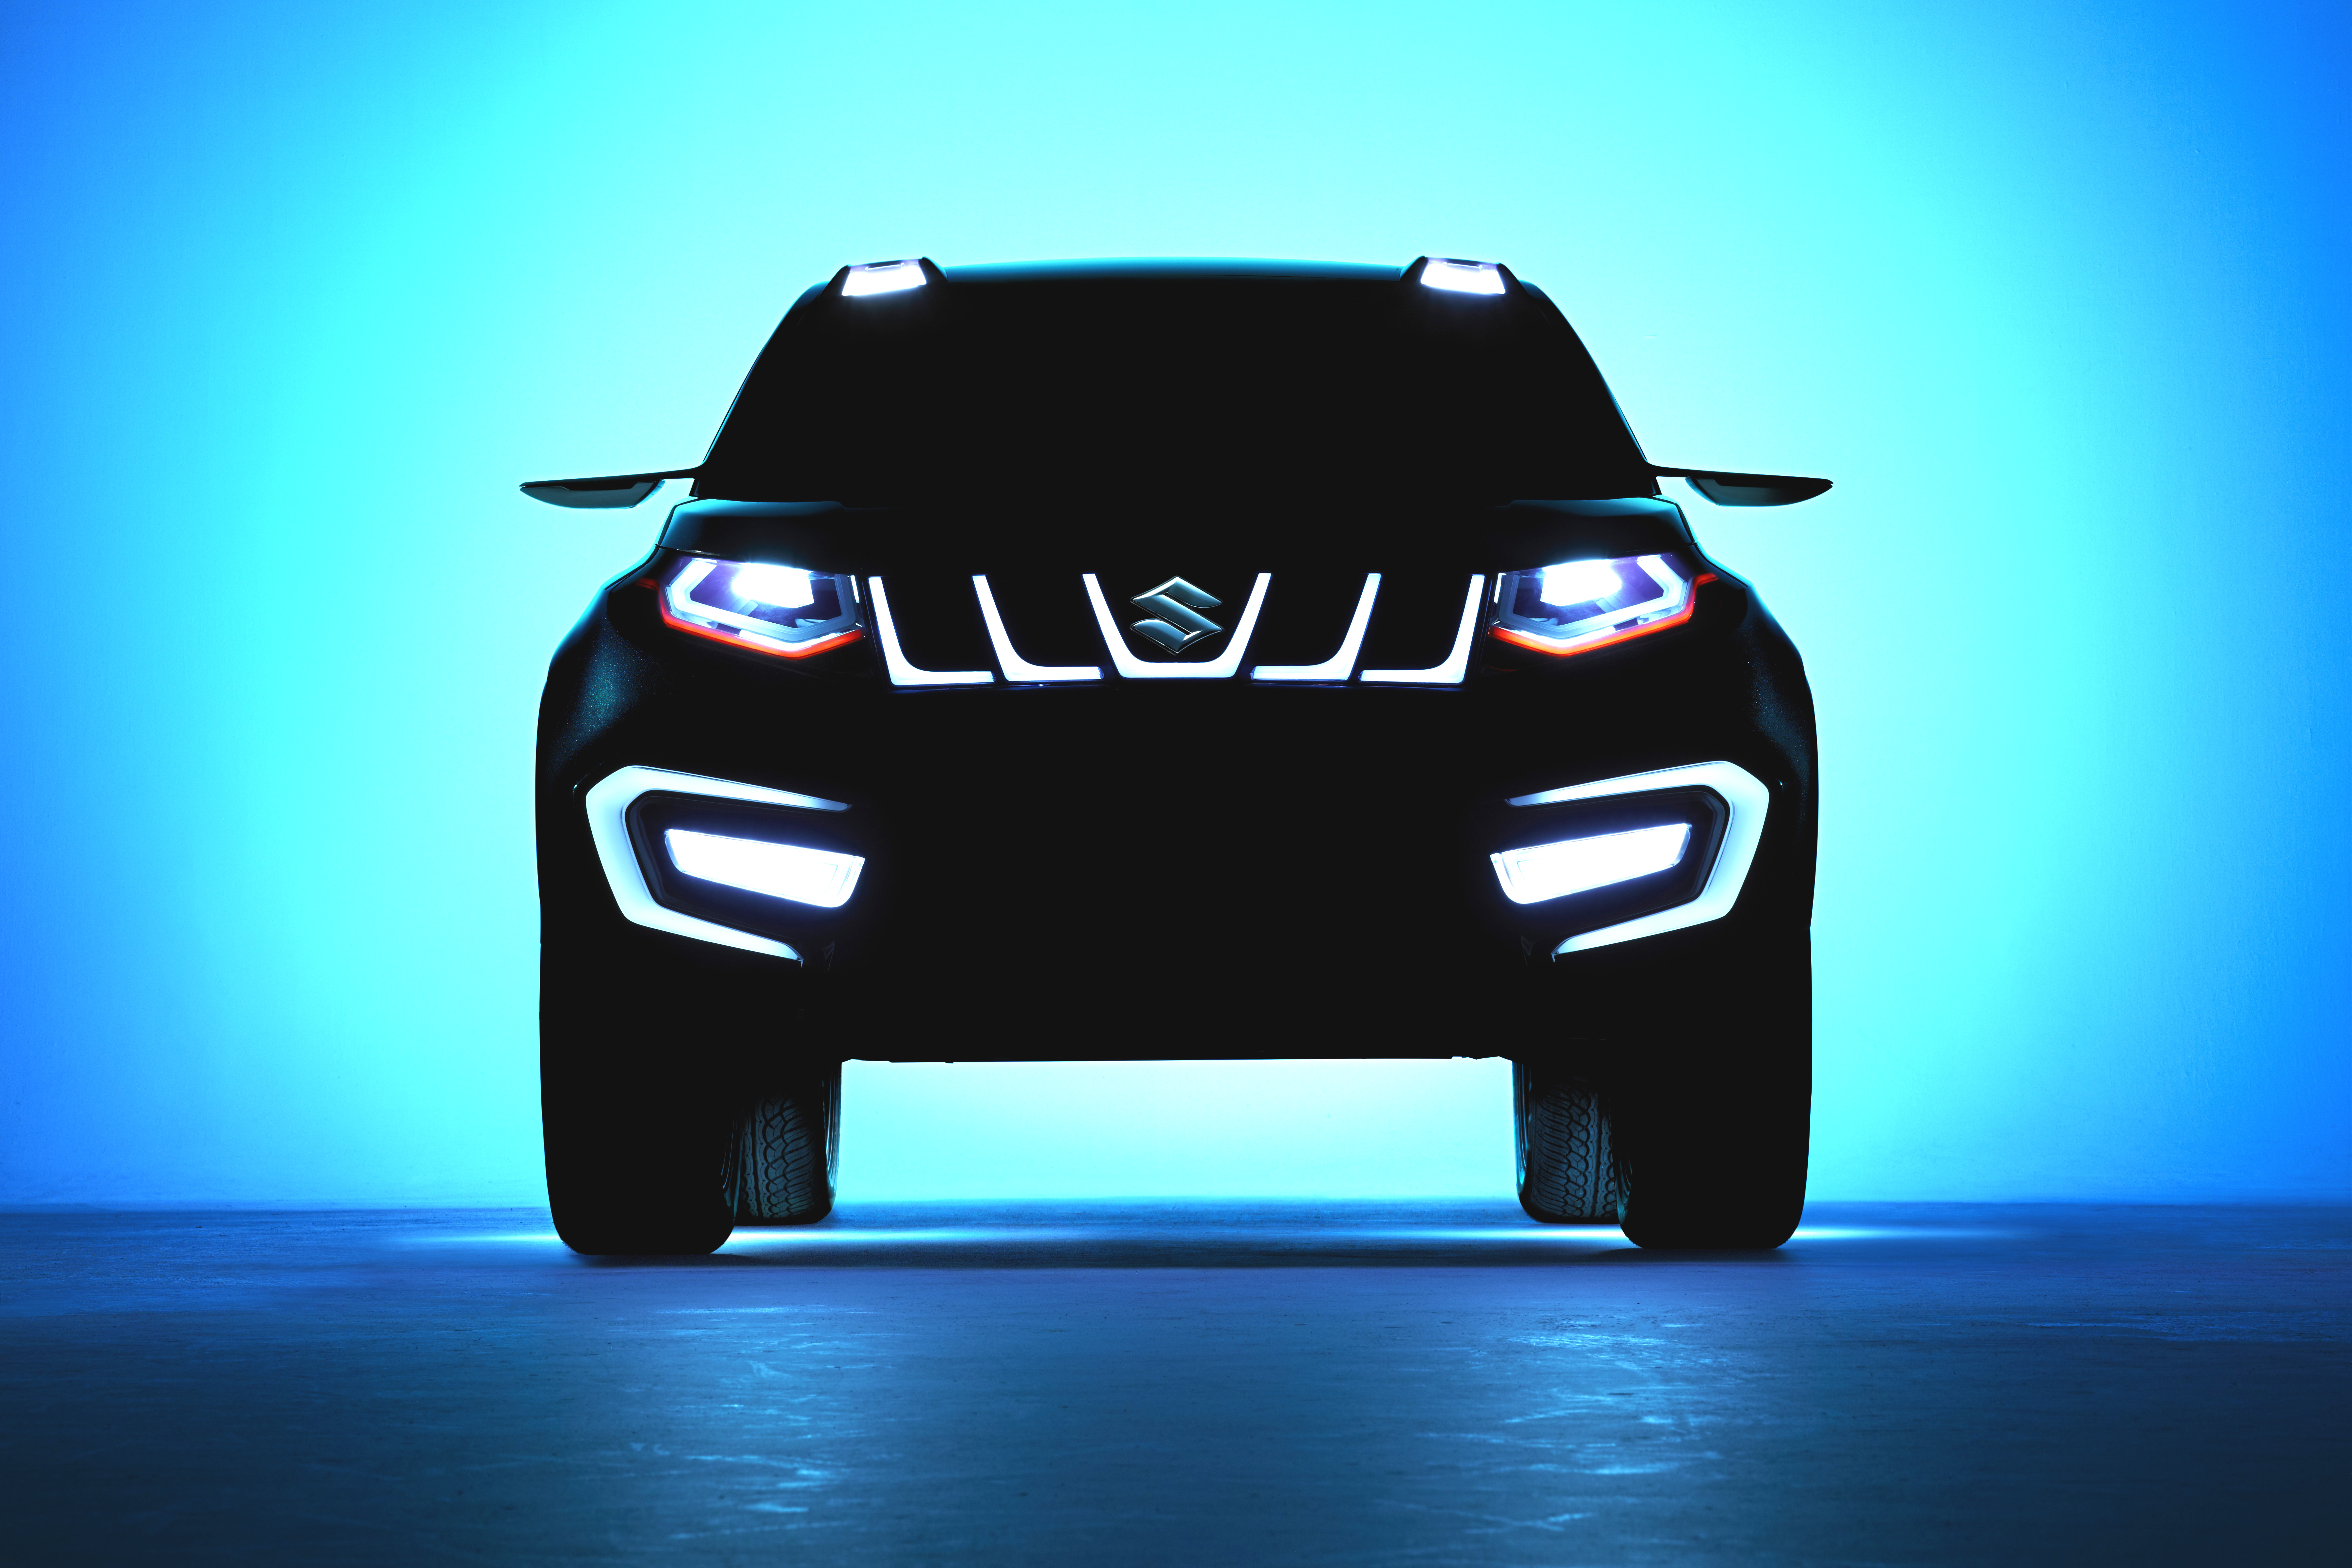 Suzuki_iV-4_Concept_Car